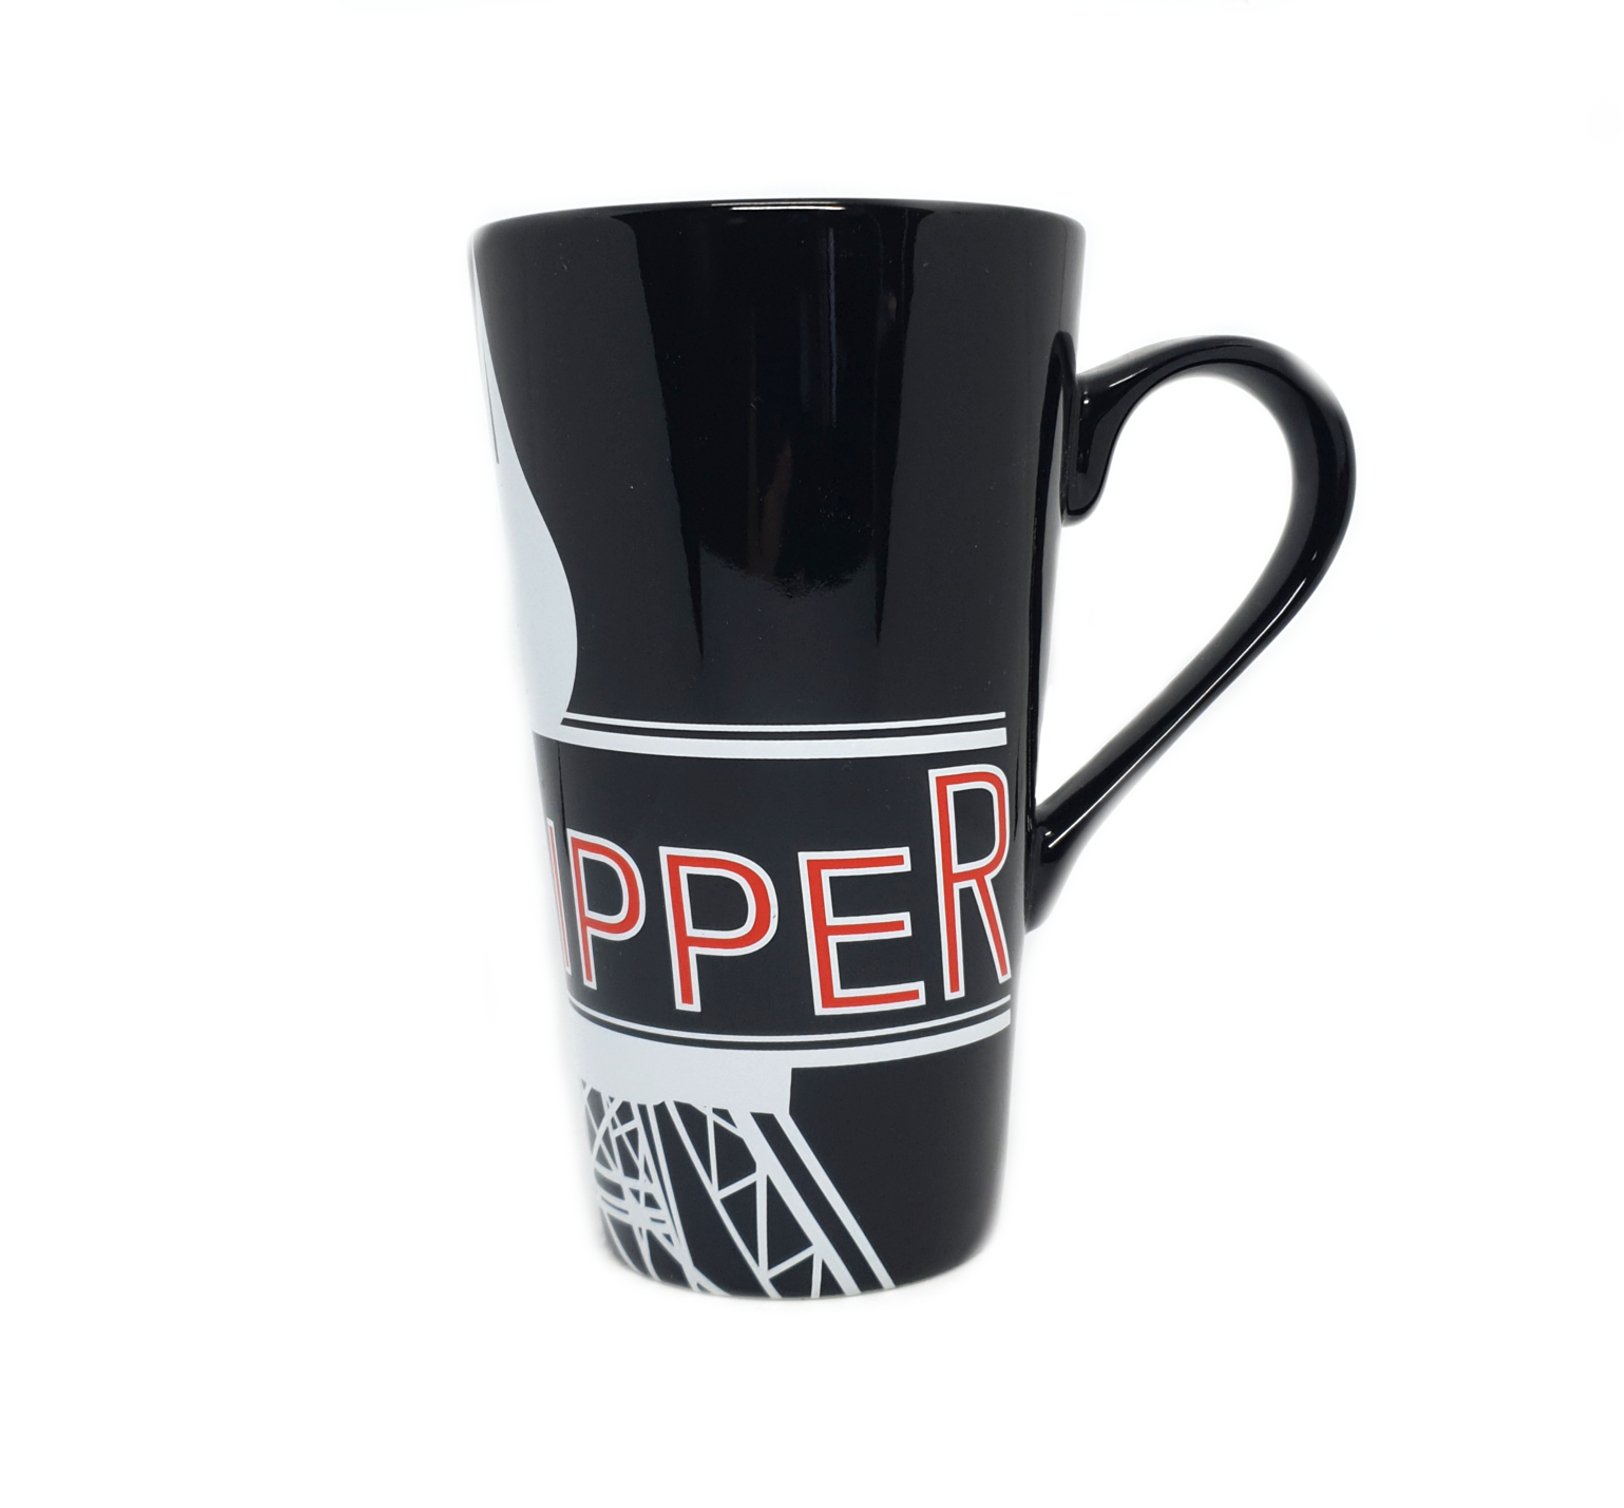 Big Dipper Mug2